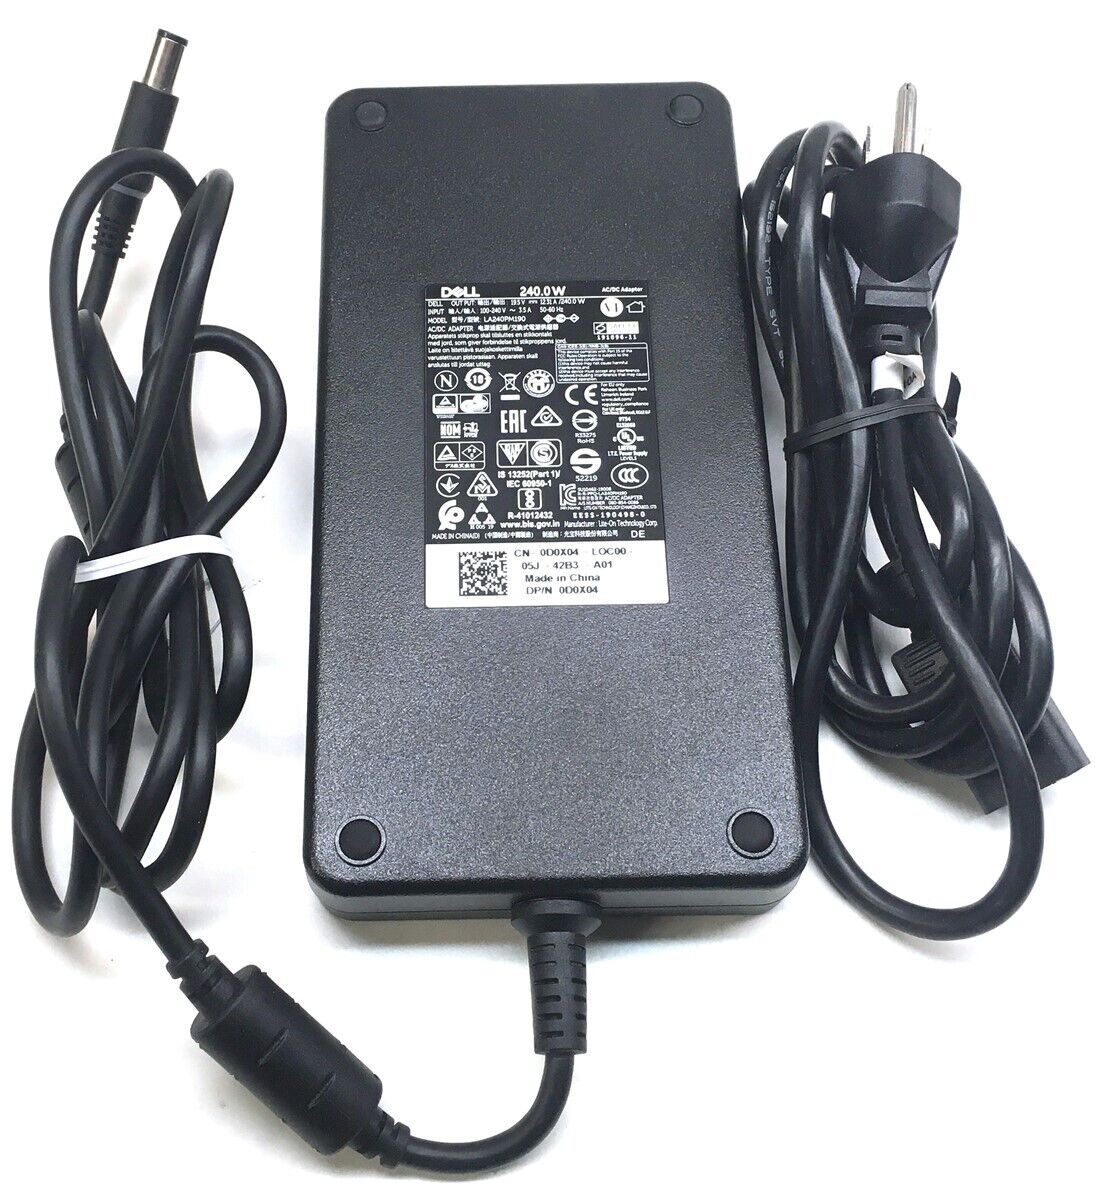 *Brand NEW*Genuine Dell LA240PM190 0D0X04 19.5V 240W AC Adapter Power Supply